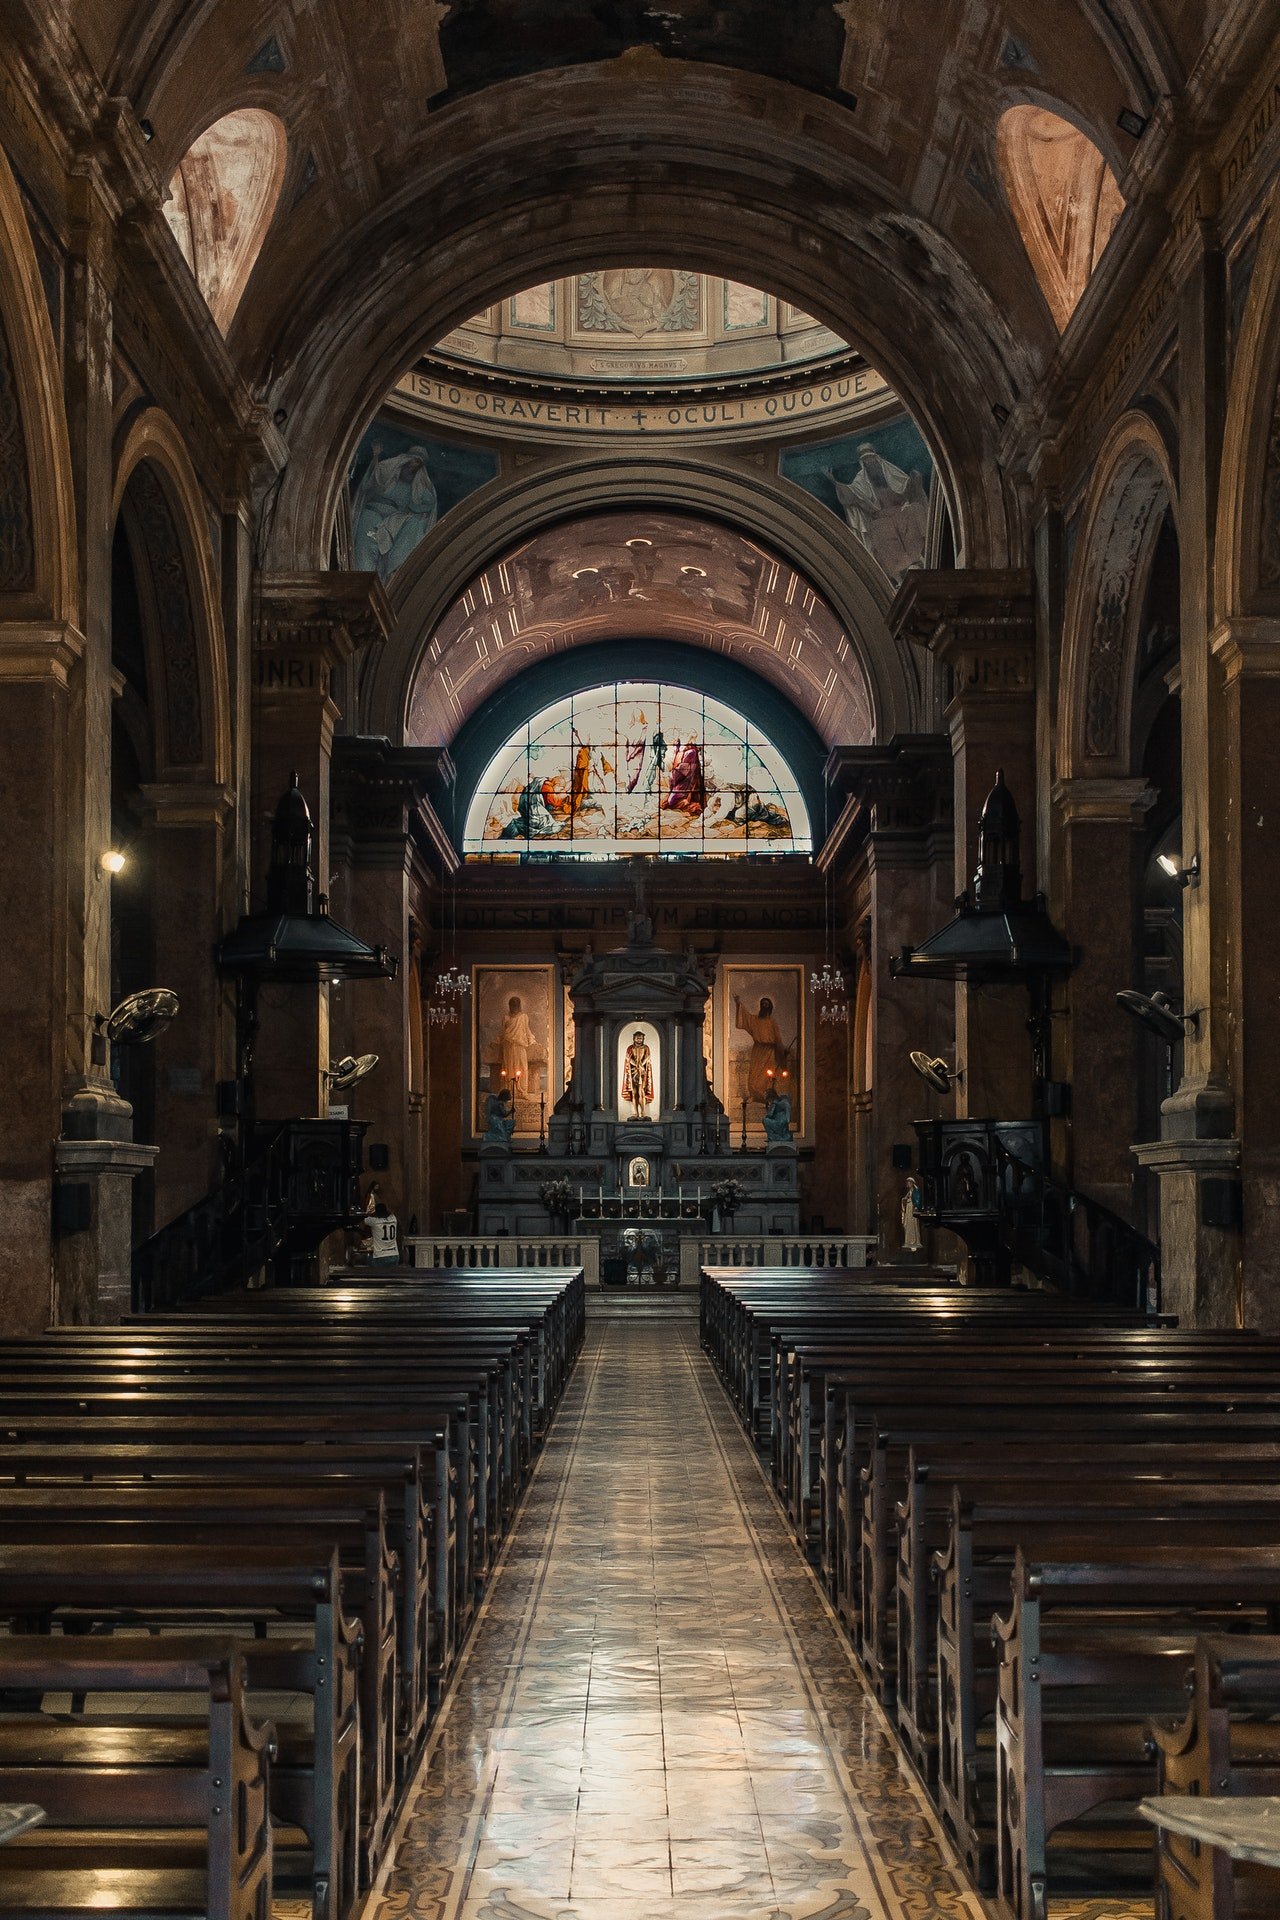 Inside a church | Source: Pexels